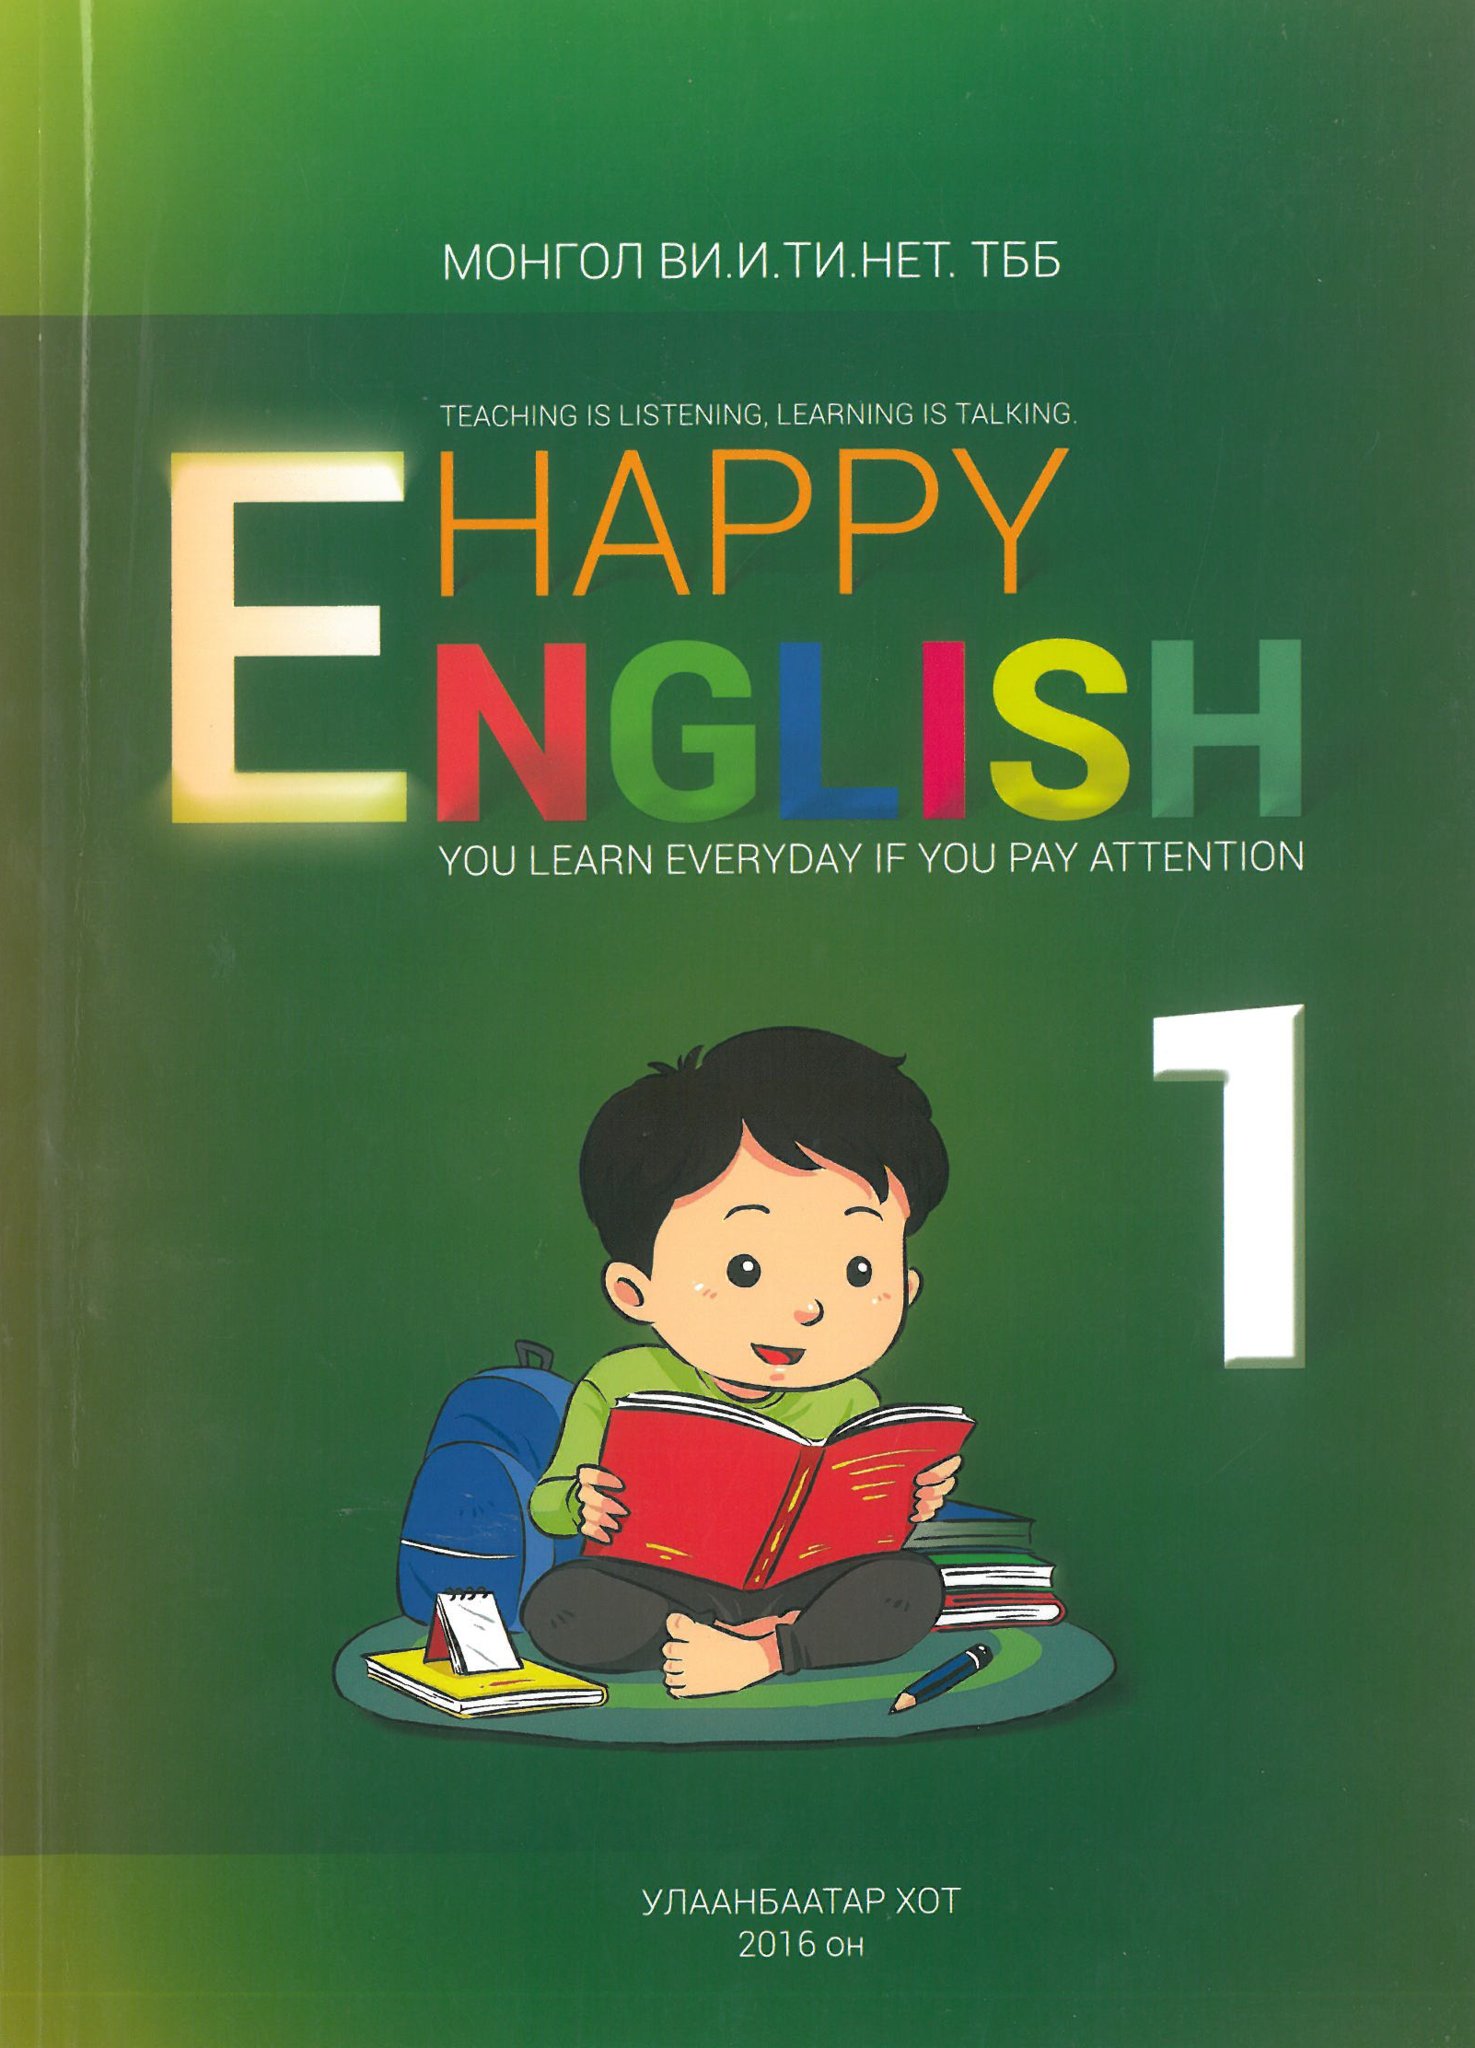 Happy english